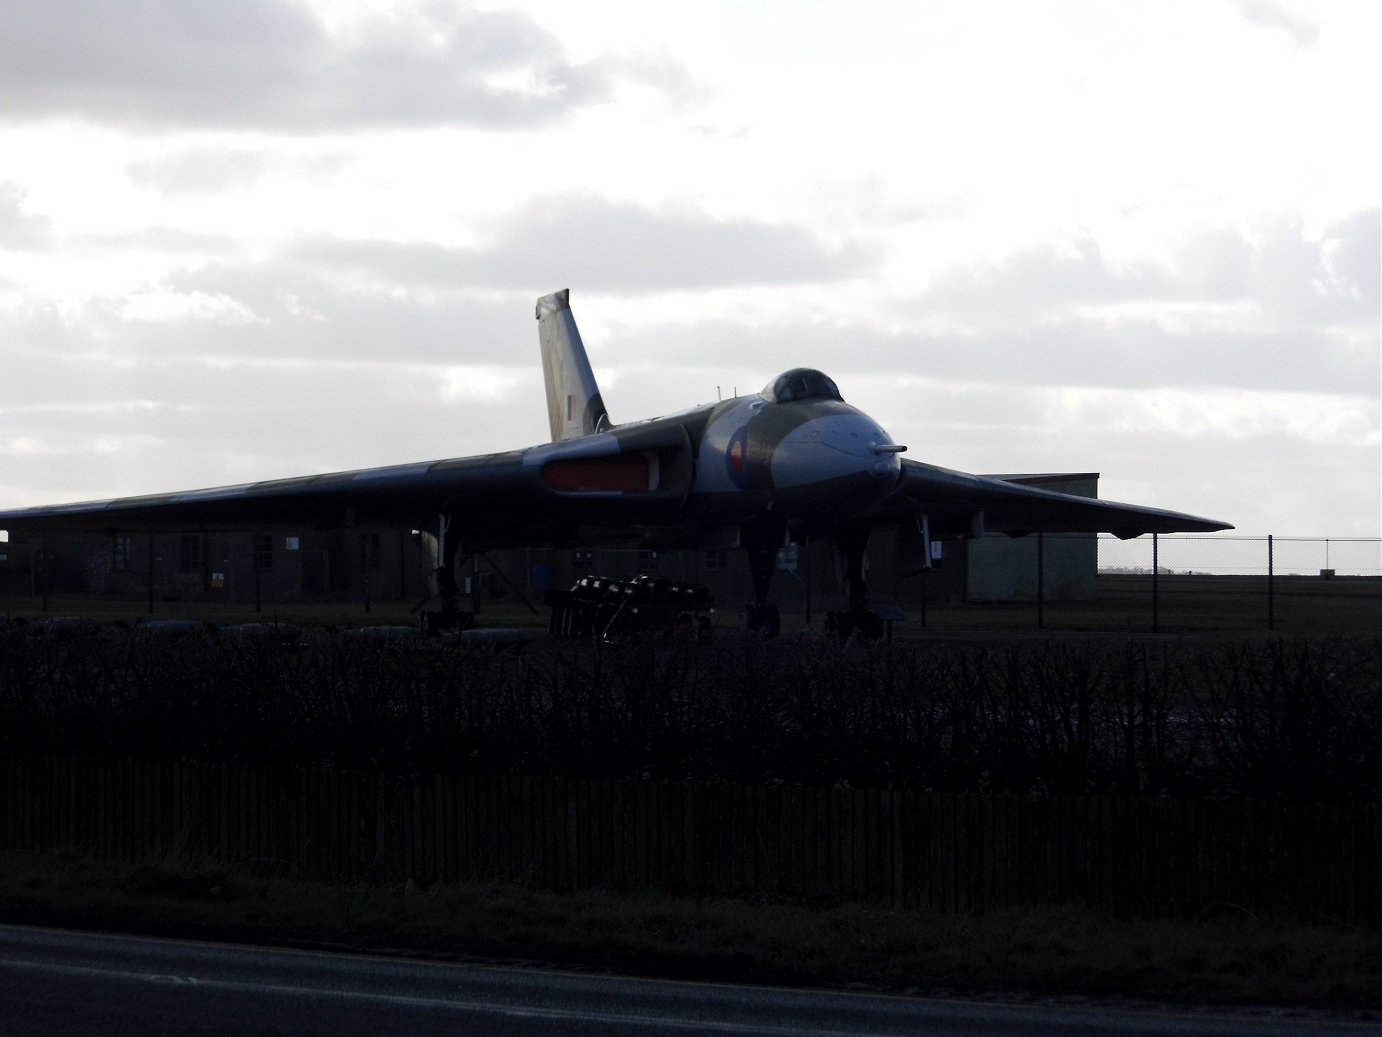 Falklands hero Avro Vulcan XM 607, RAF Waddington 19th February 2019.